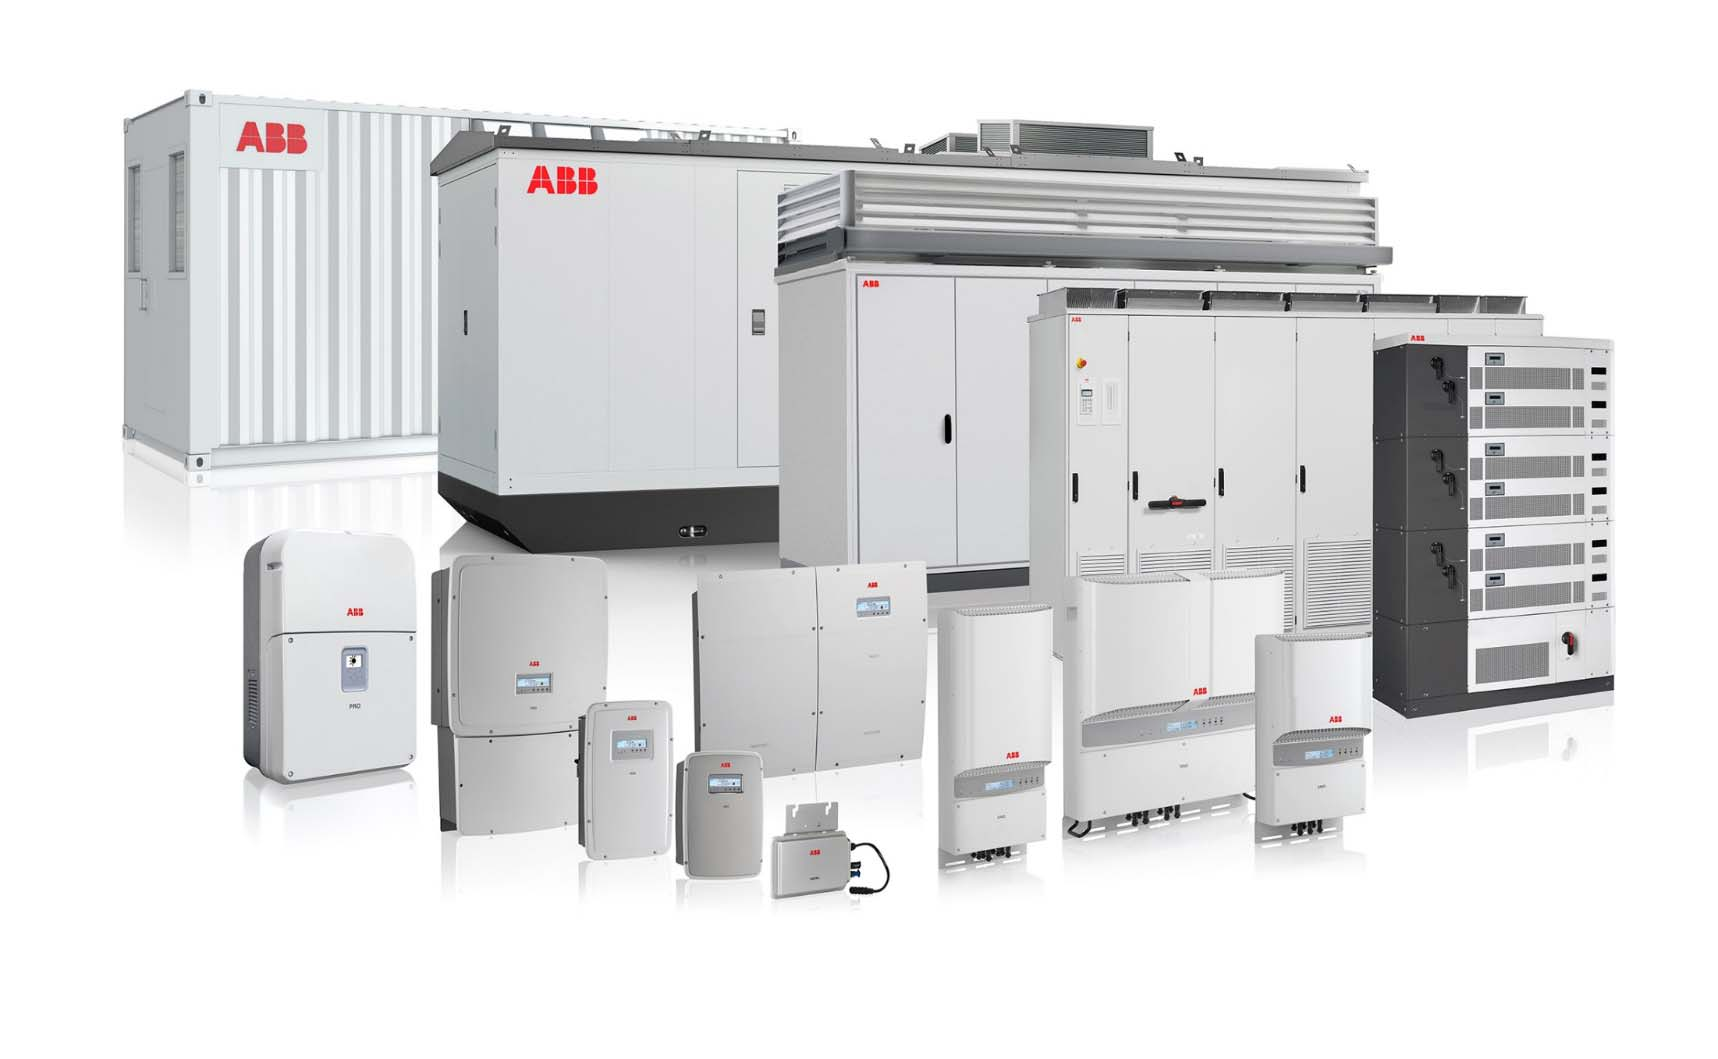 ABB solar inverters product portfolio